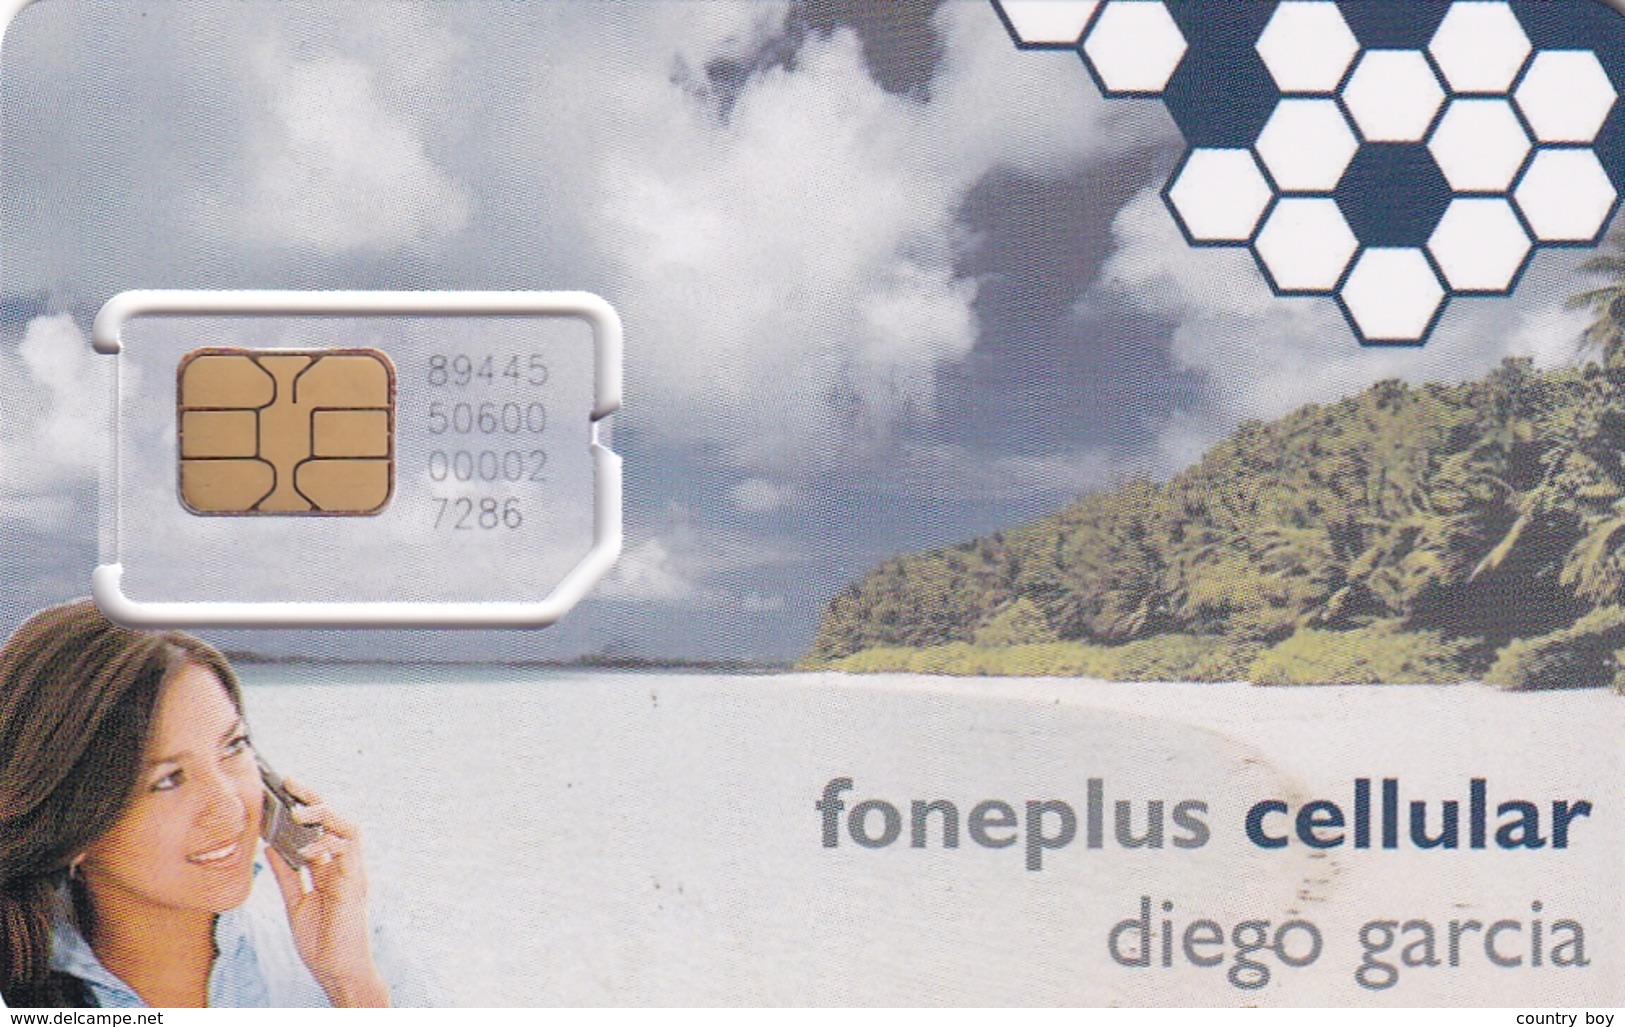 DIEGO GRCIA , PHONEPLUS CELLULAR CARD - Diego-Garcia